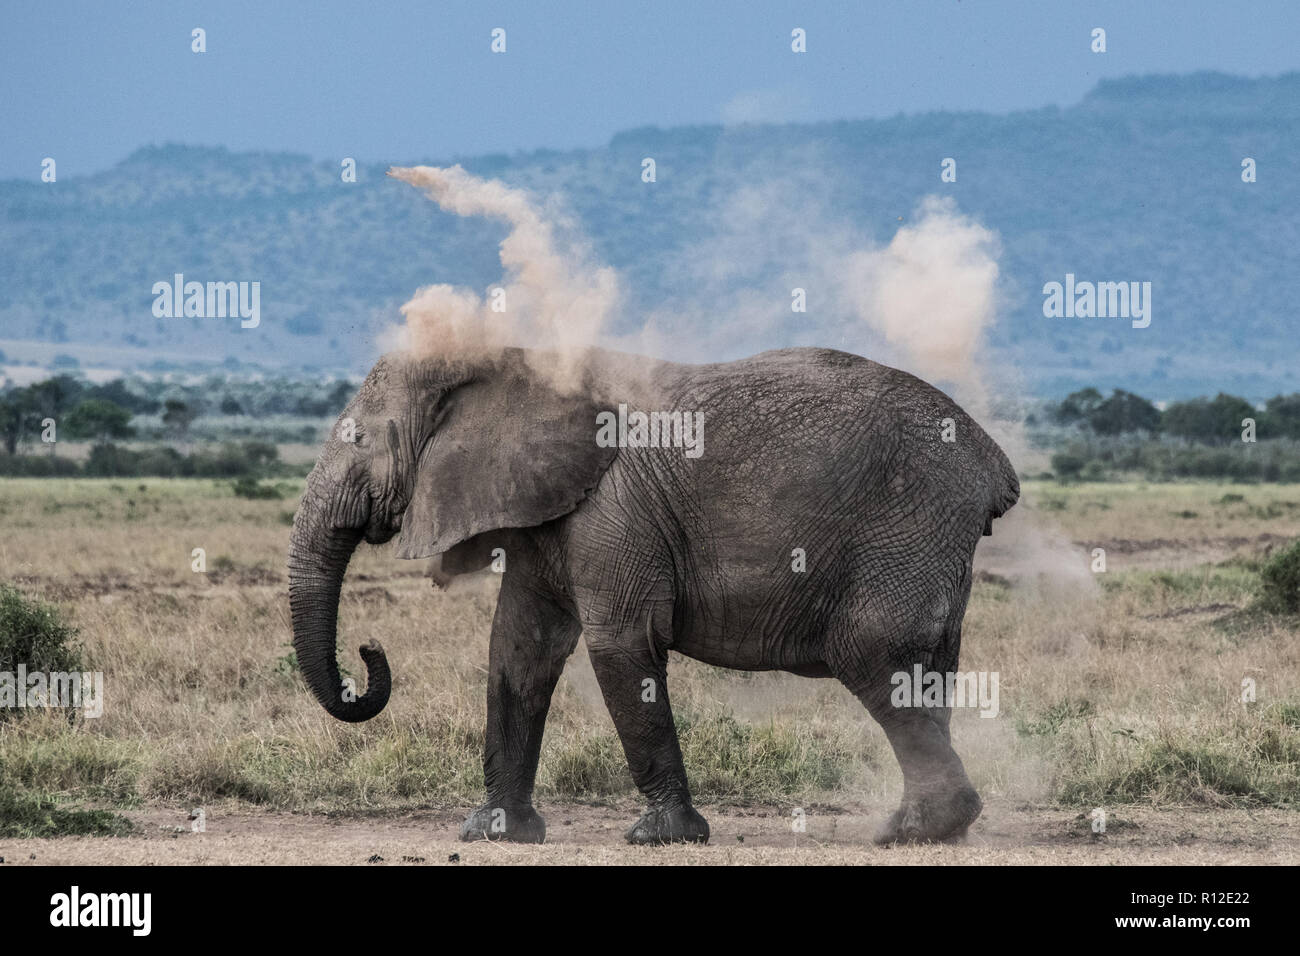 Elephant throwing dirt on back as sunscreen, Masai Mara, Kenya Stock Photo